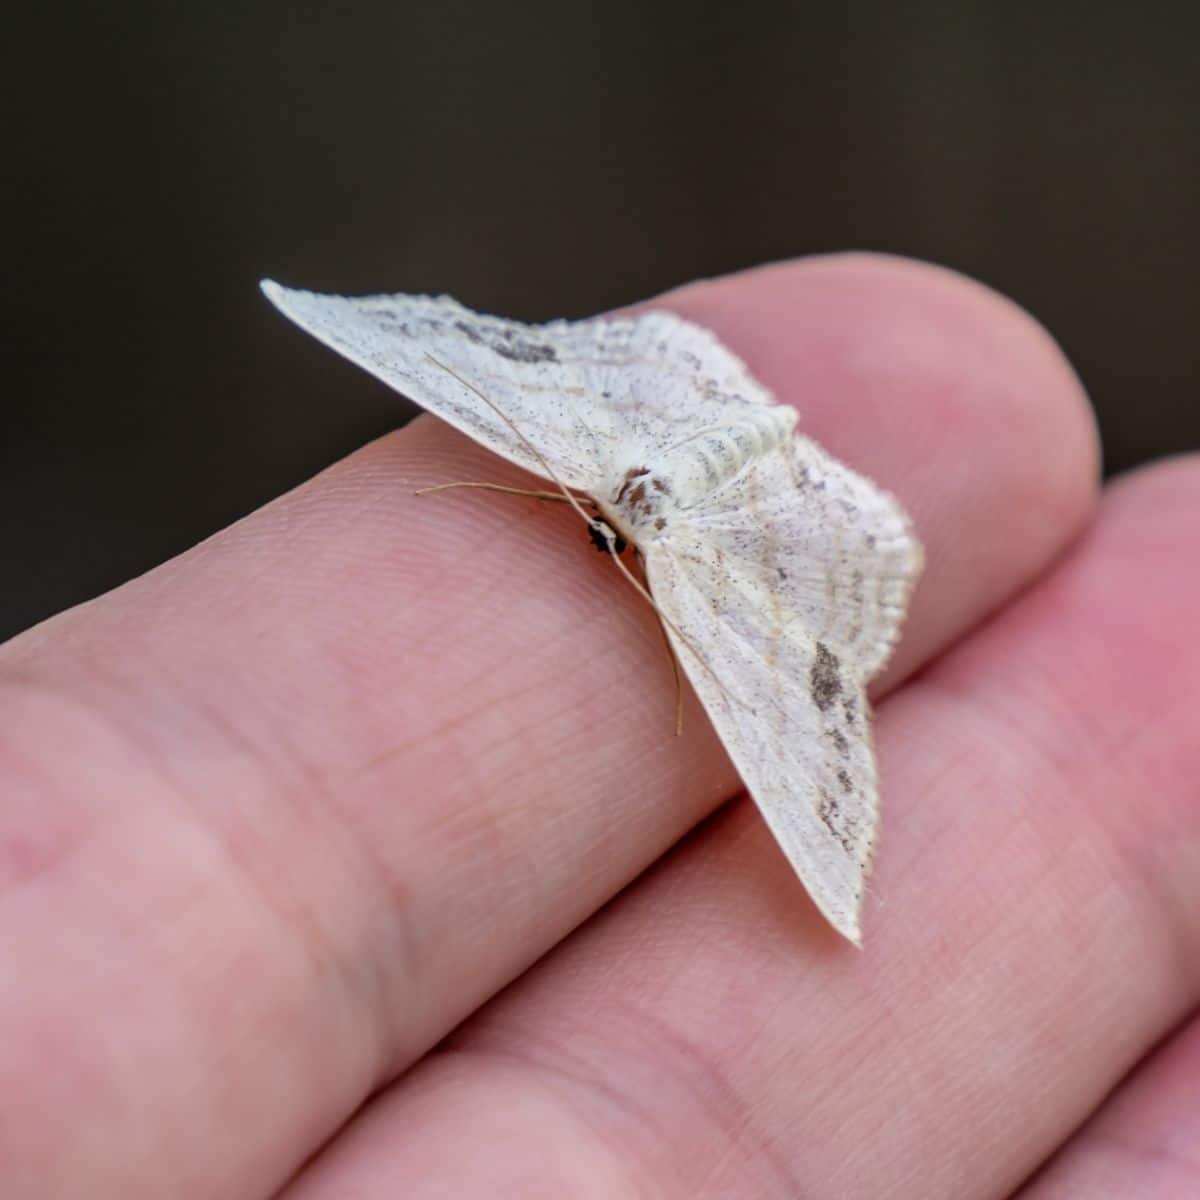 What do moths symbolize